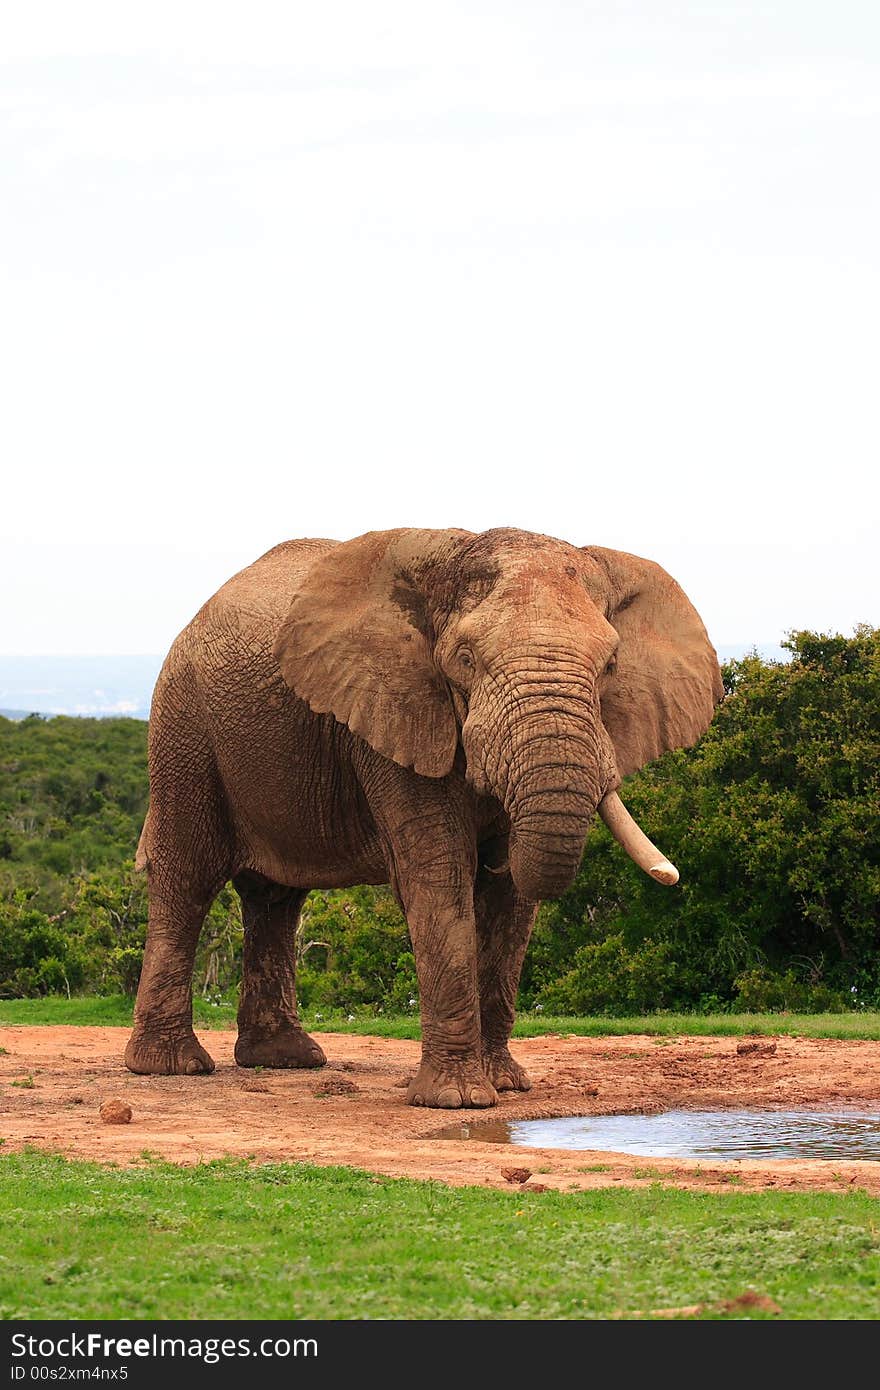 Elephant Bull (Loxodonta africana) with only one tusk